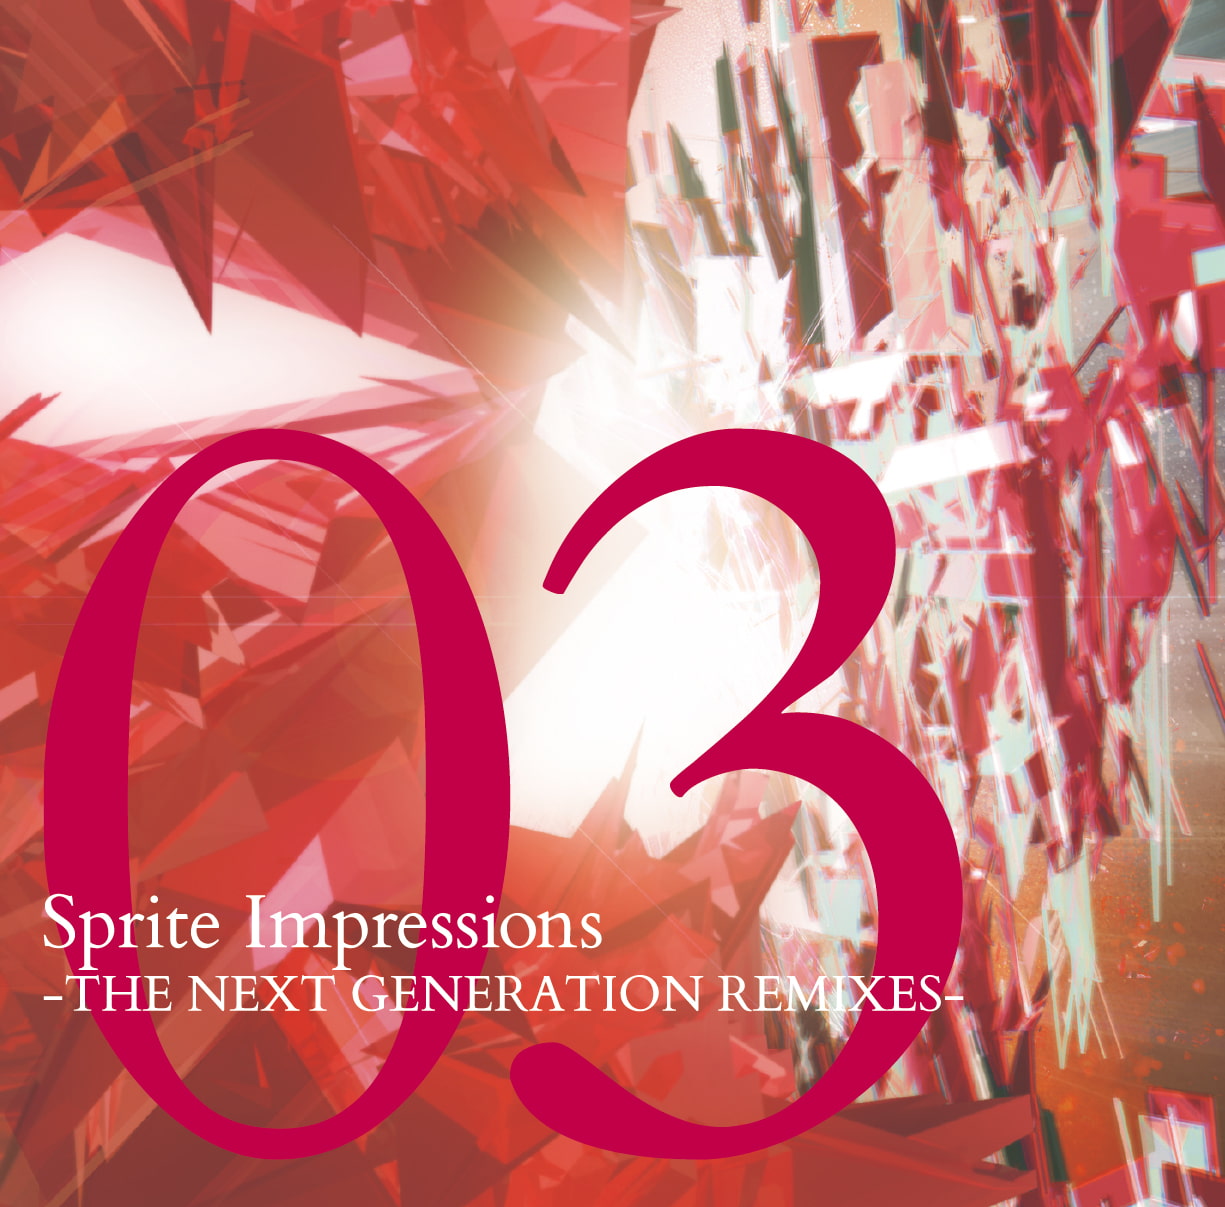 Sprite Impressions03 -THE NEXT GENERATION REMIXES-